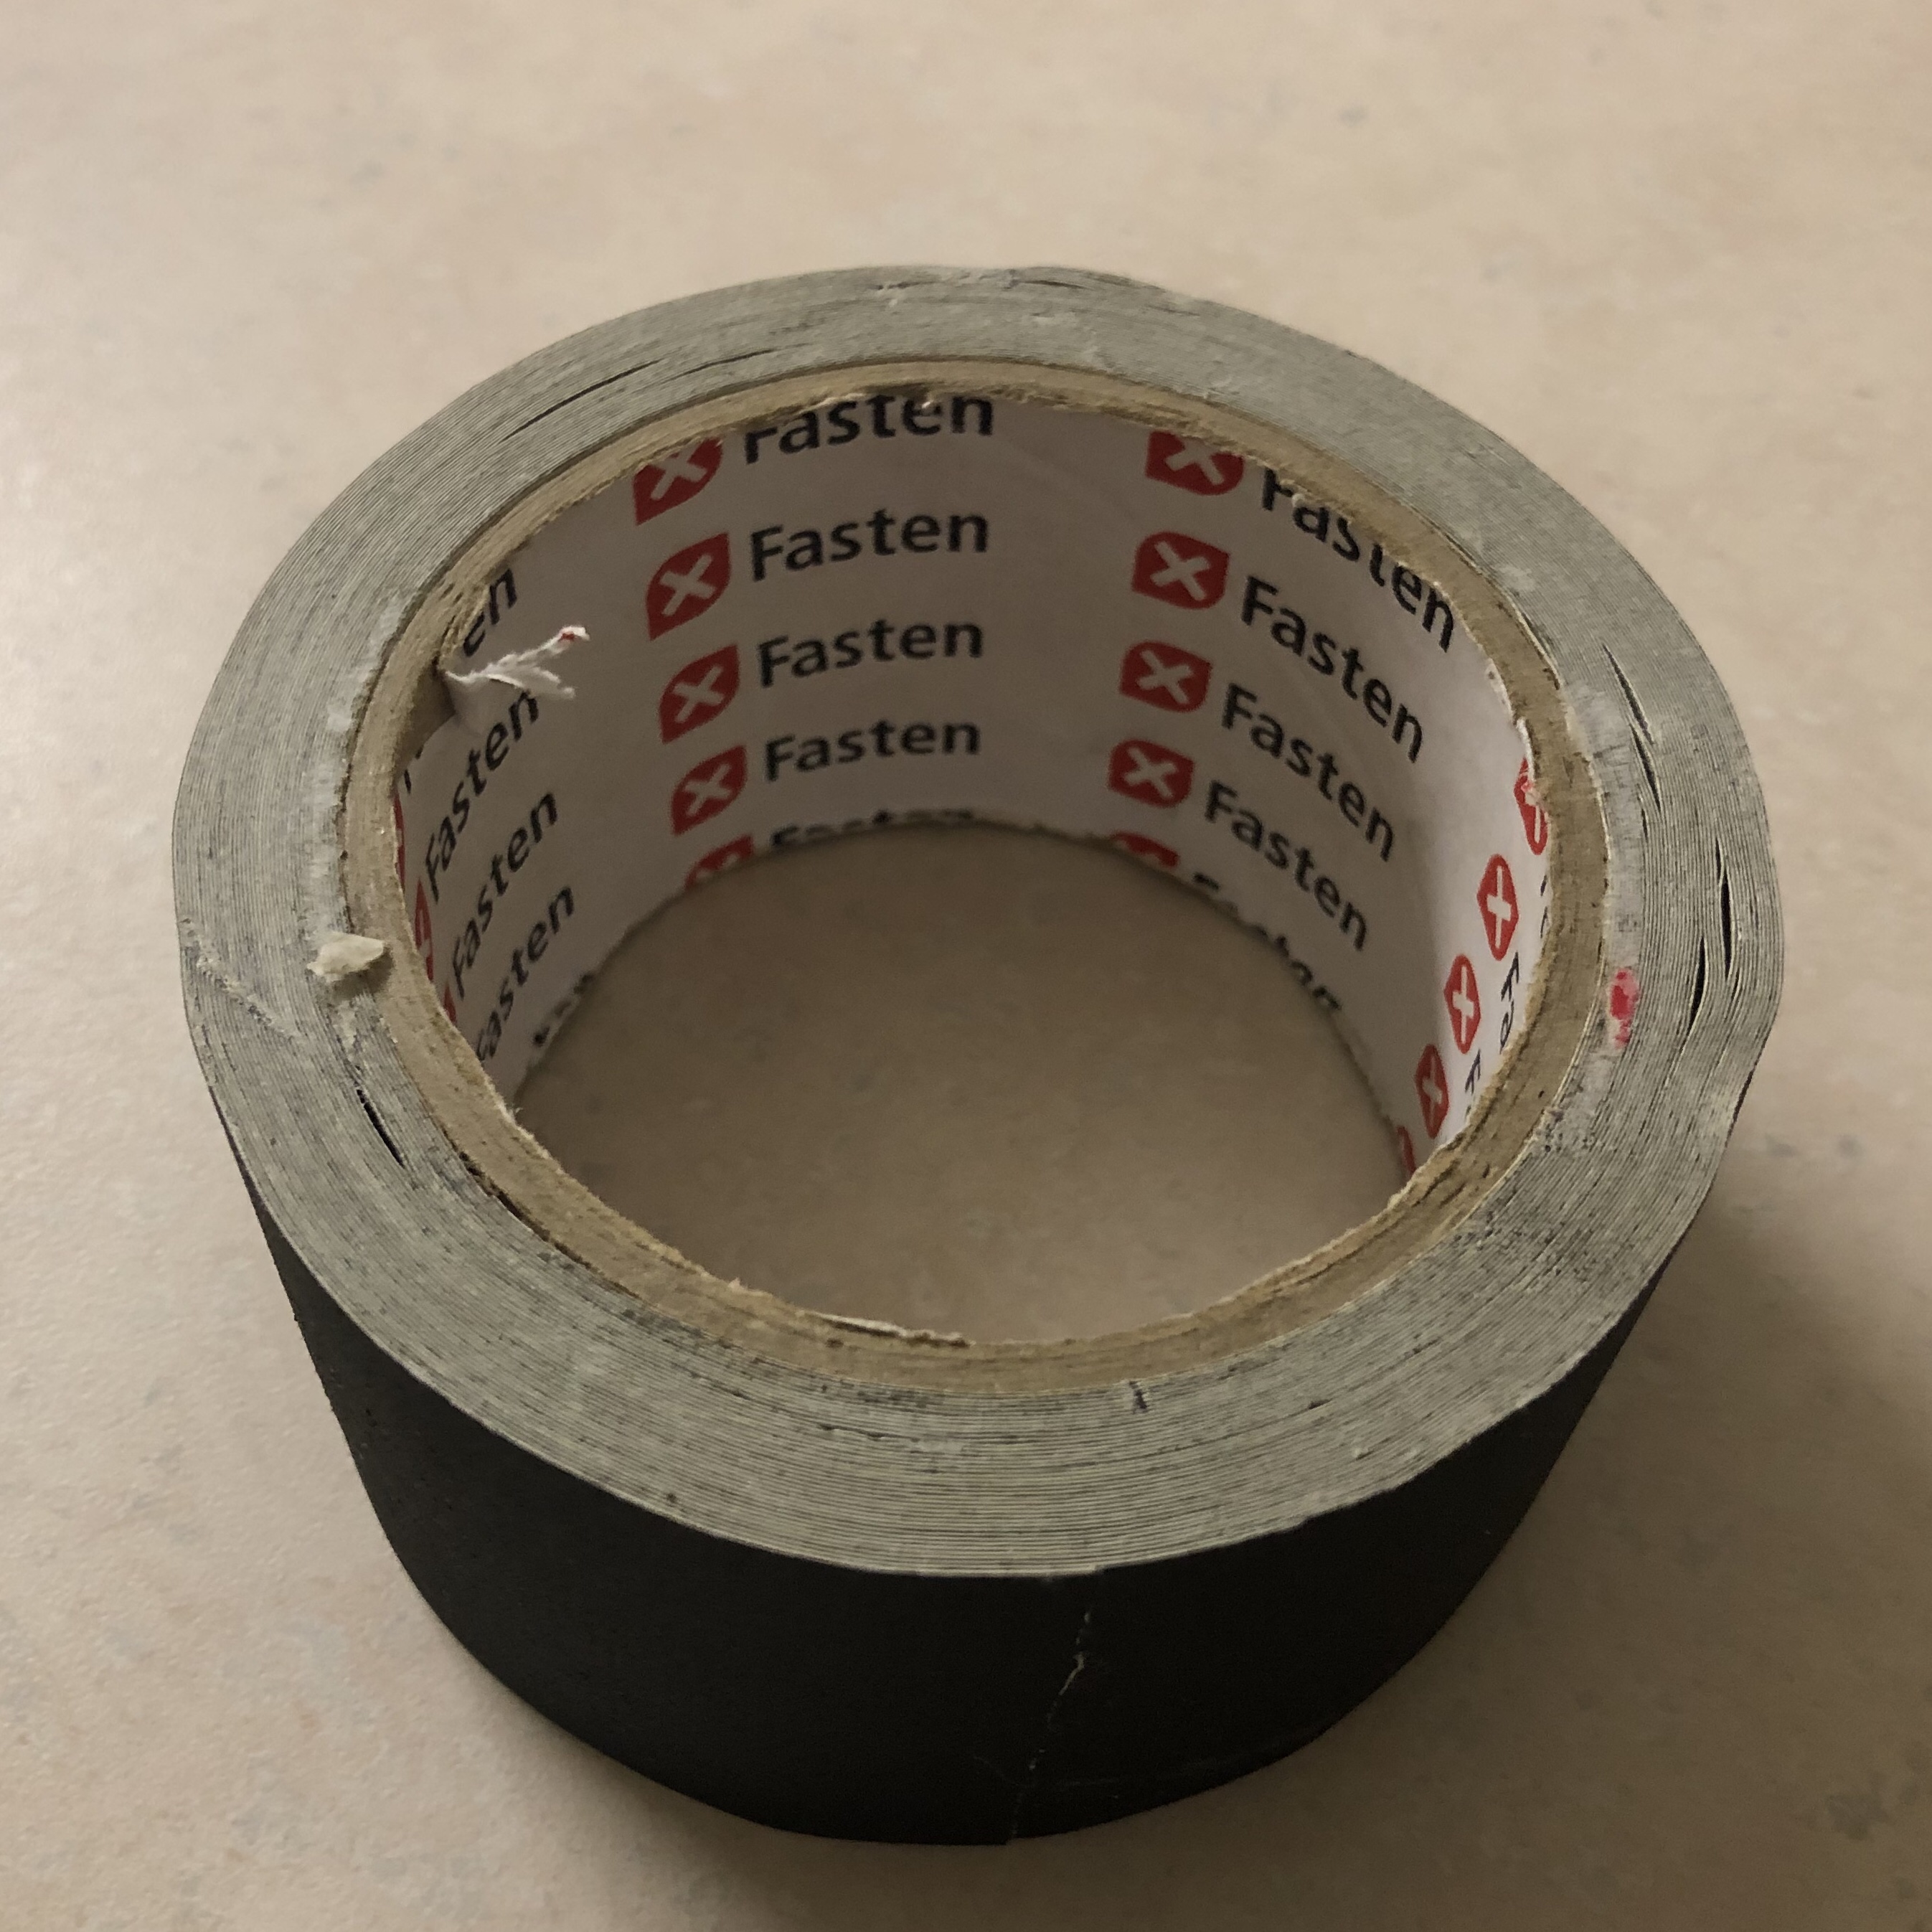 A roll of gaffer tape